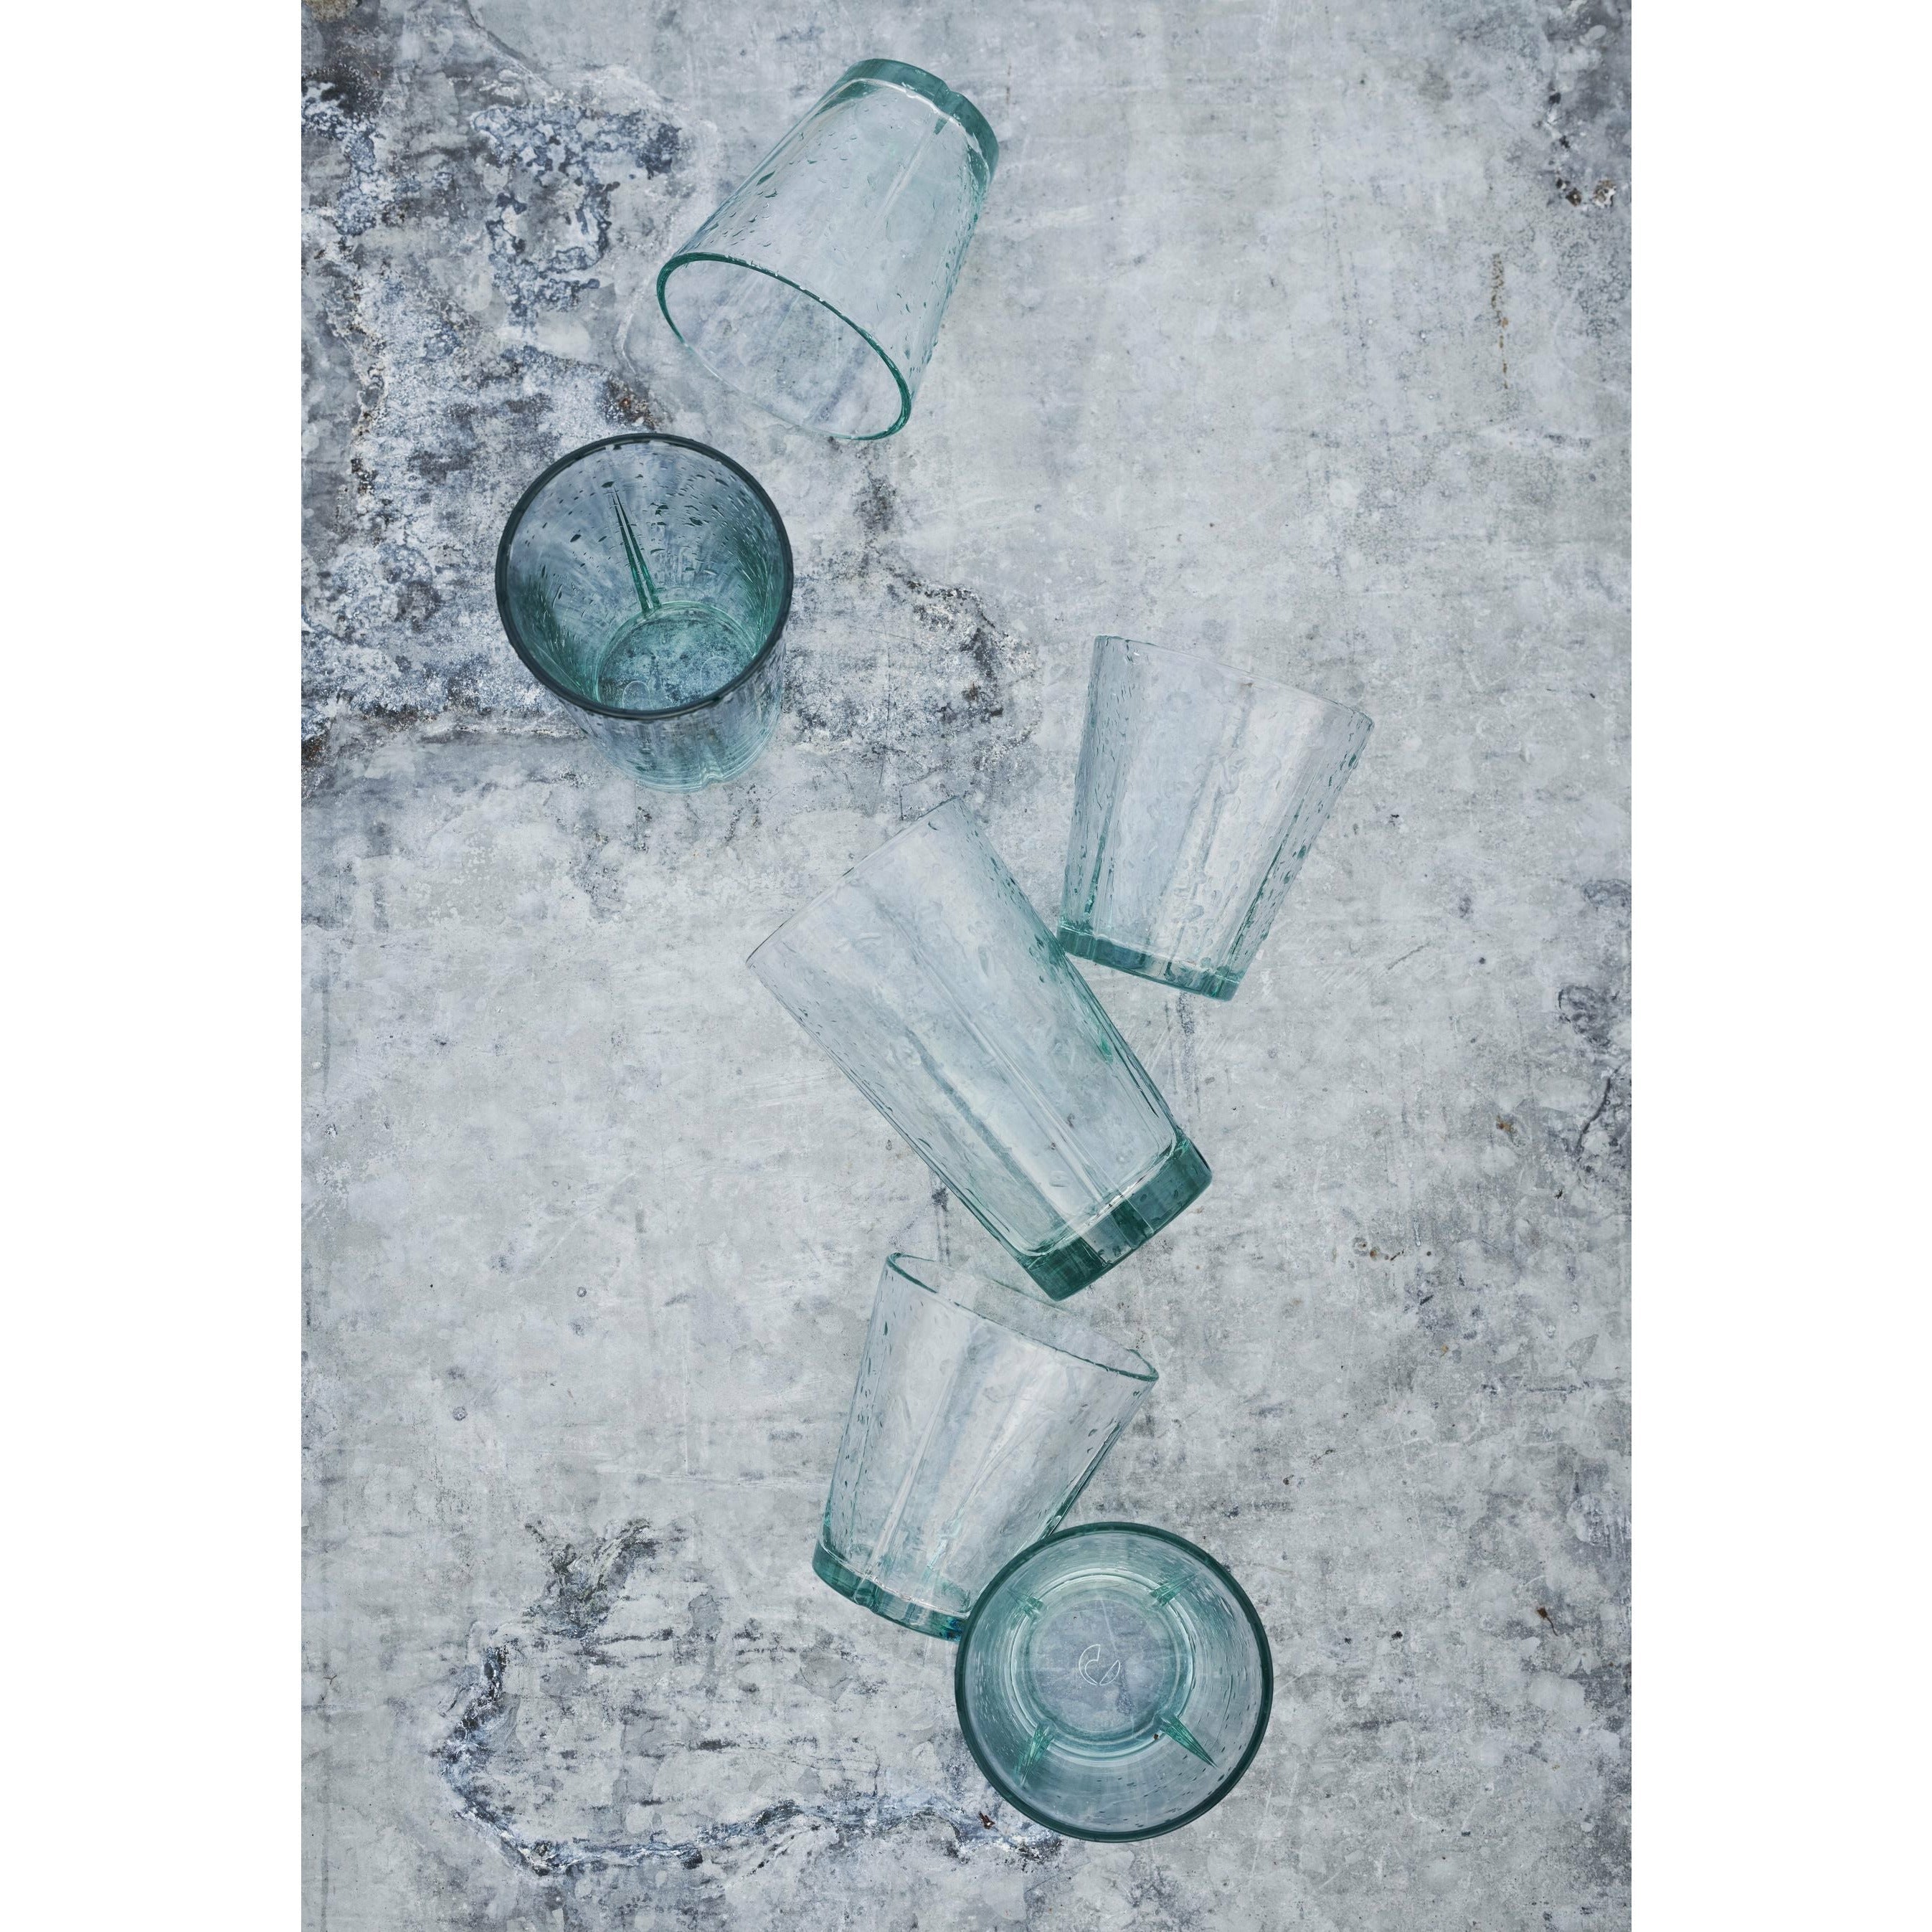 Rosendahl Grand Cru Water Glass Recycling Glass 26 Cl, 4 st.